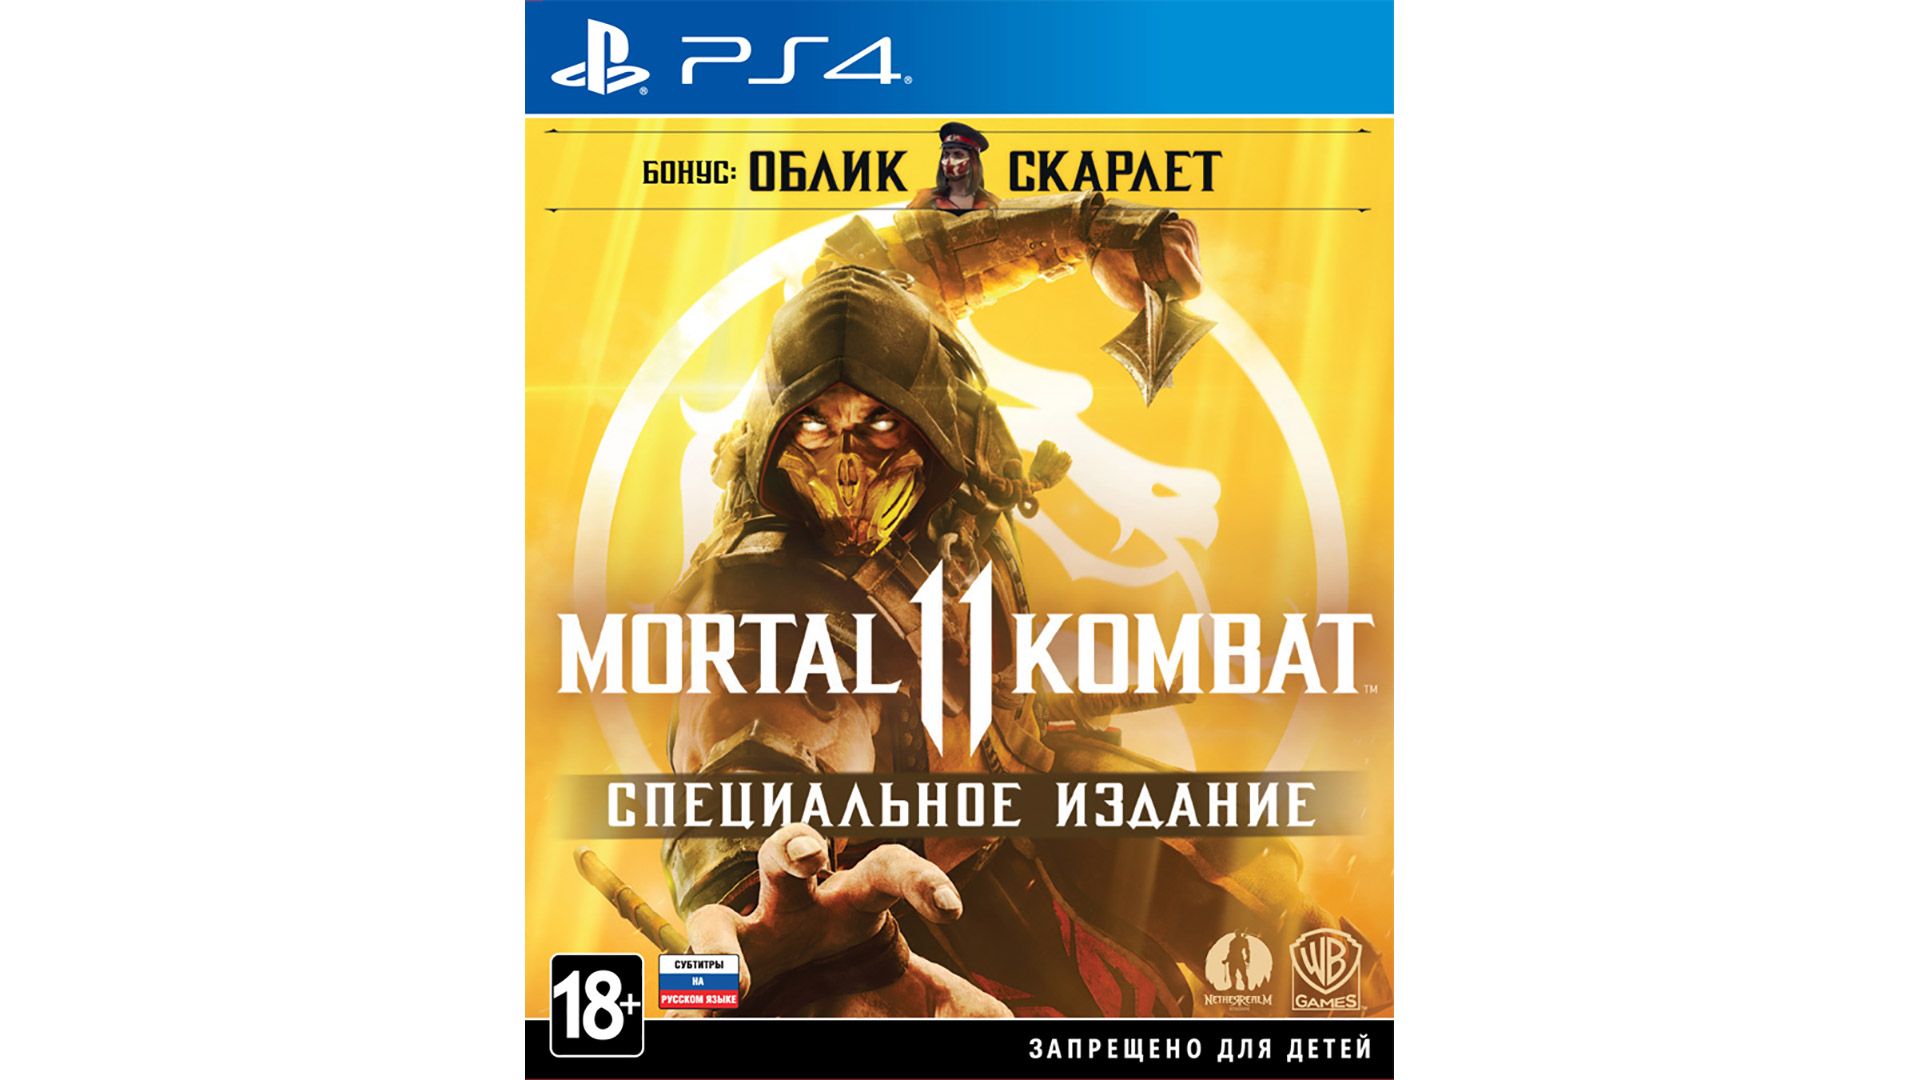 Мк 11 на пс4. MK 11 ps4. МК 11 диск ps4. Mortal Kombat 11 (ps4). Mortal Kombat 11 Ultimate ps4 диск.